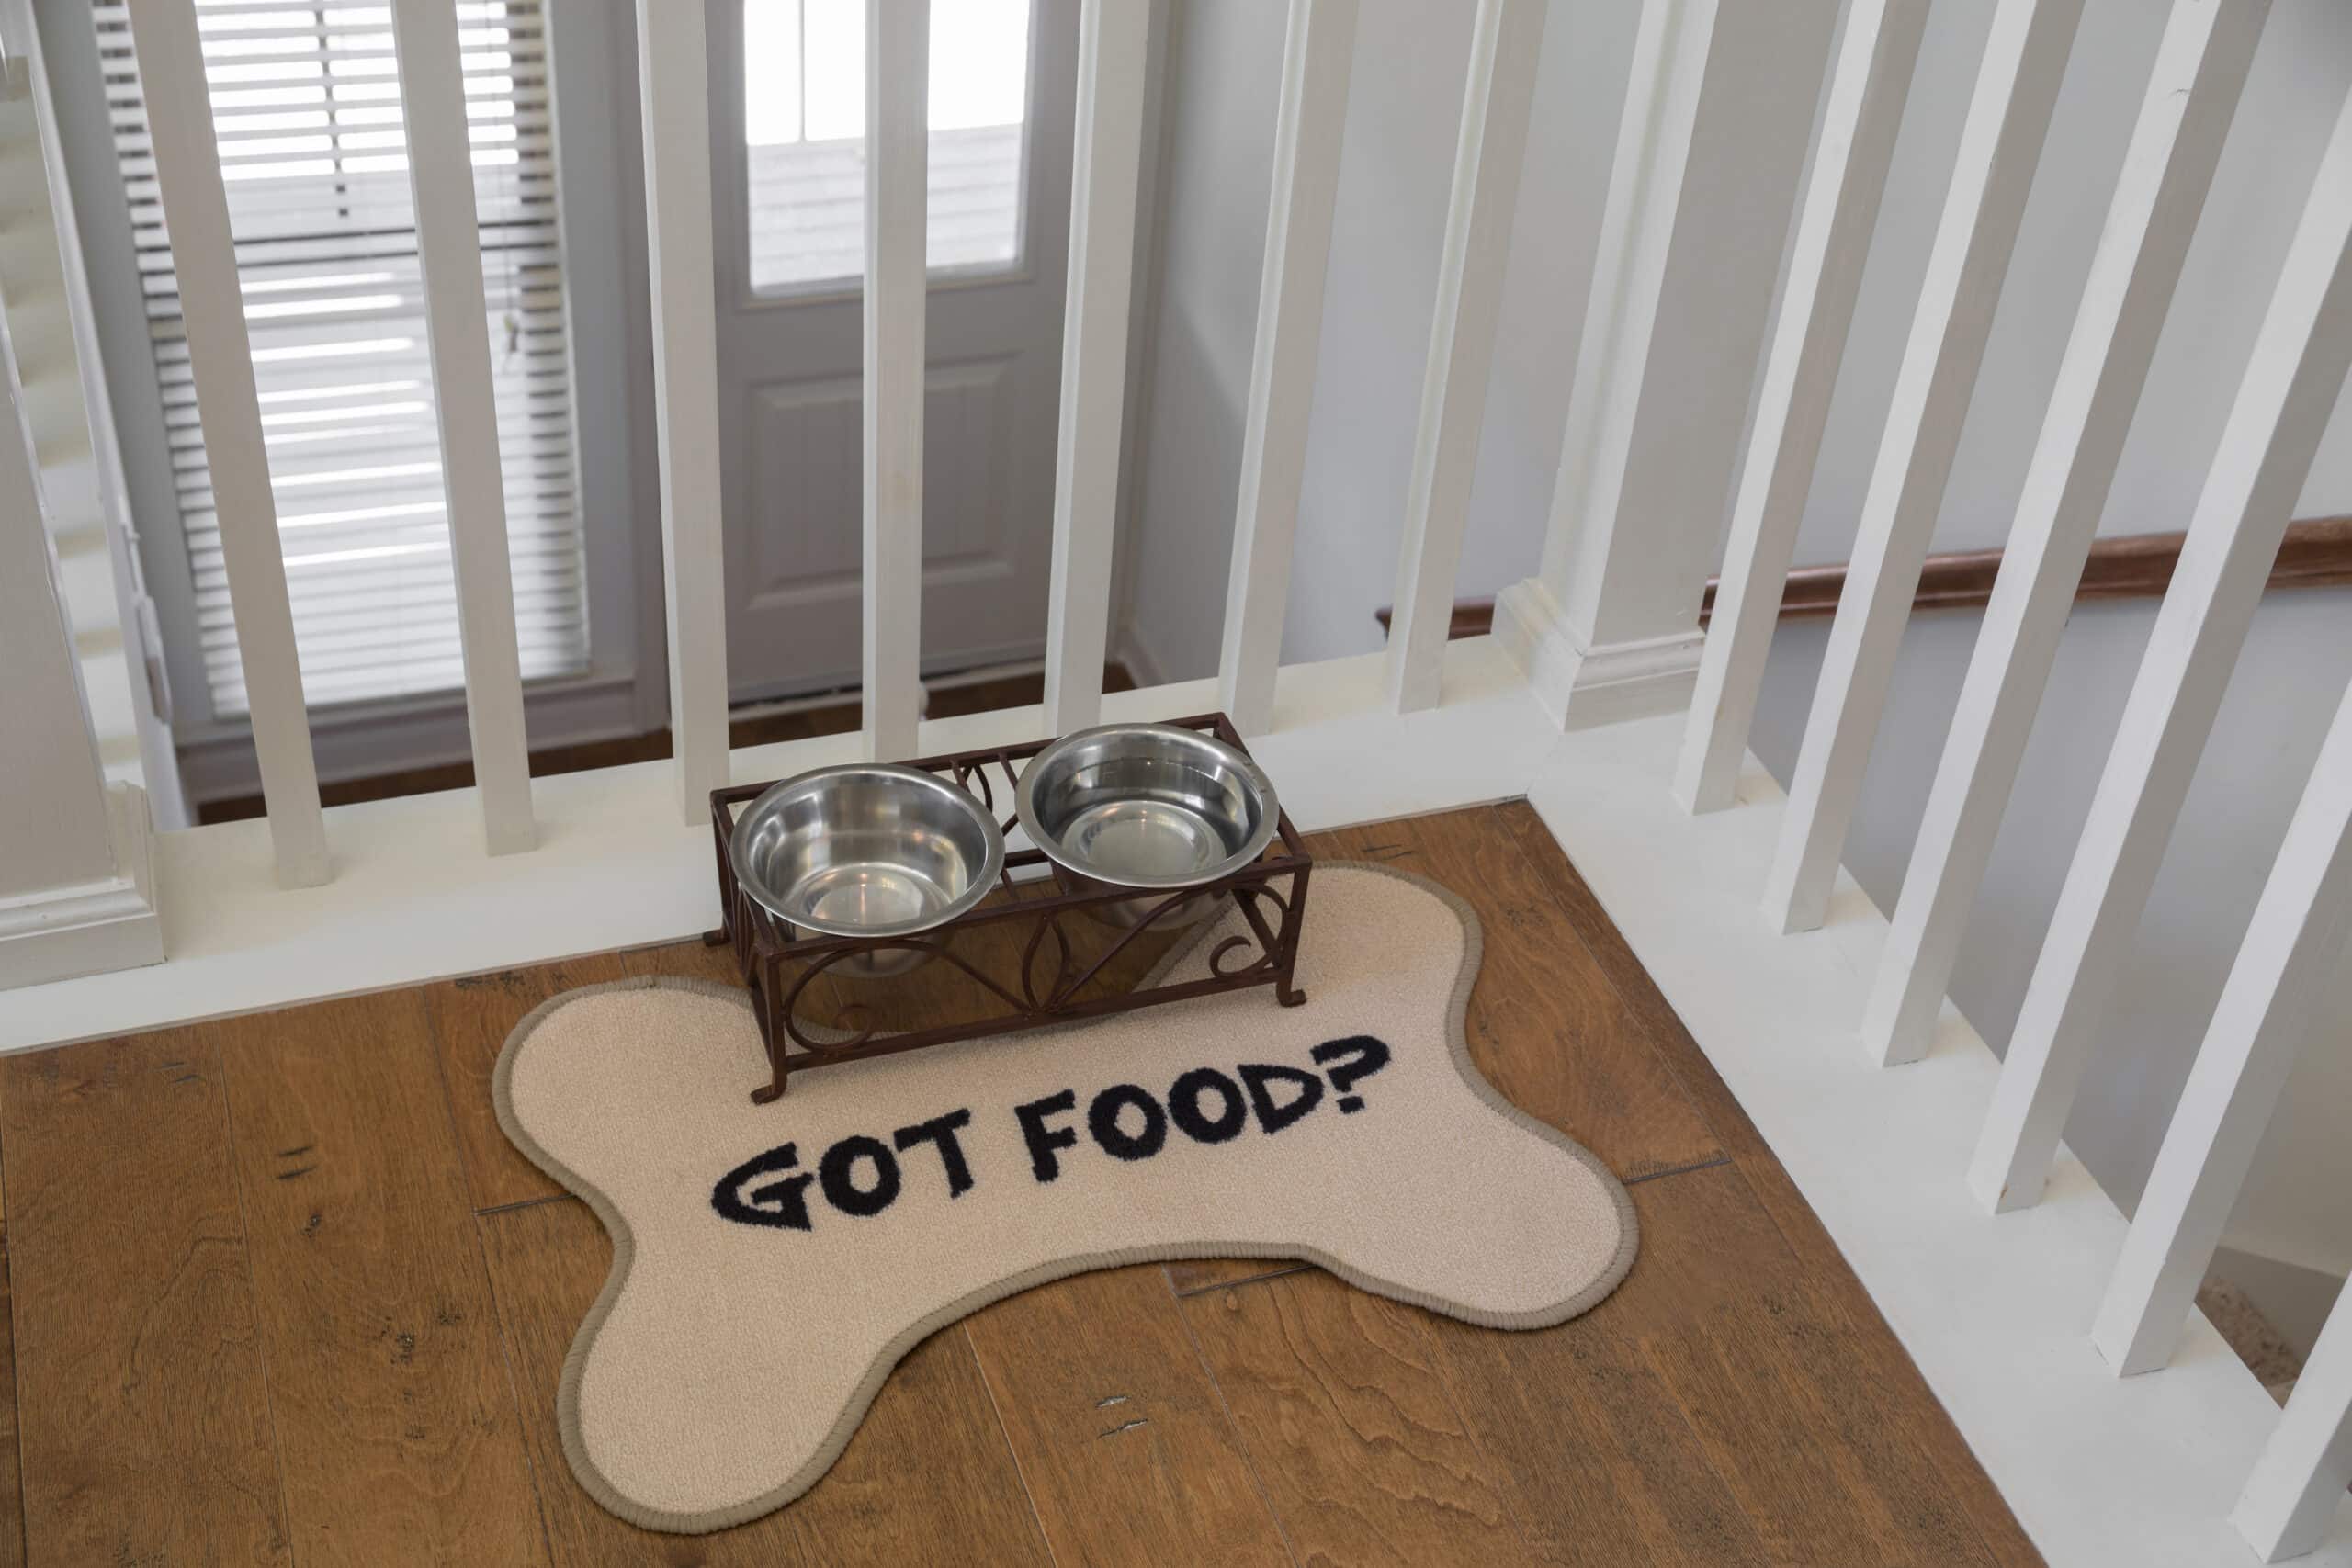 Got food? dog bone stair mat.